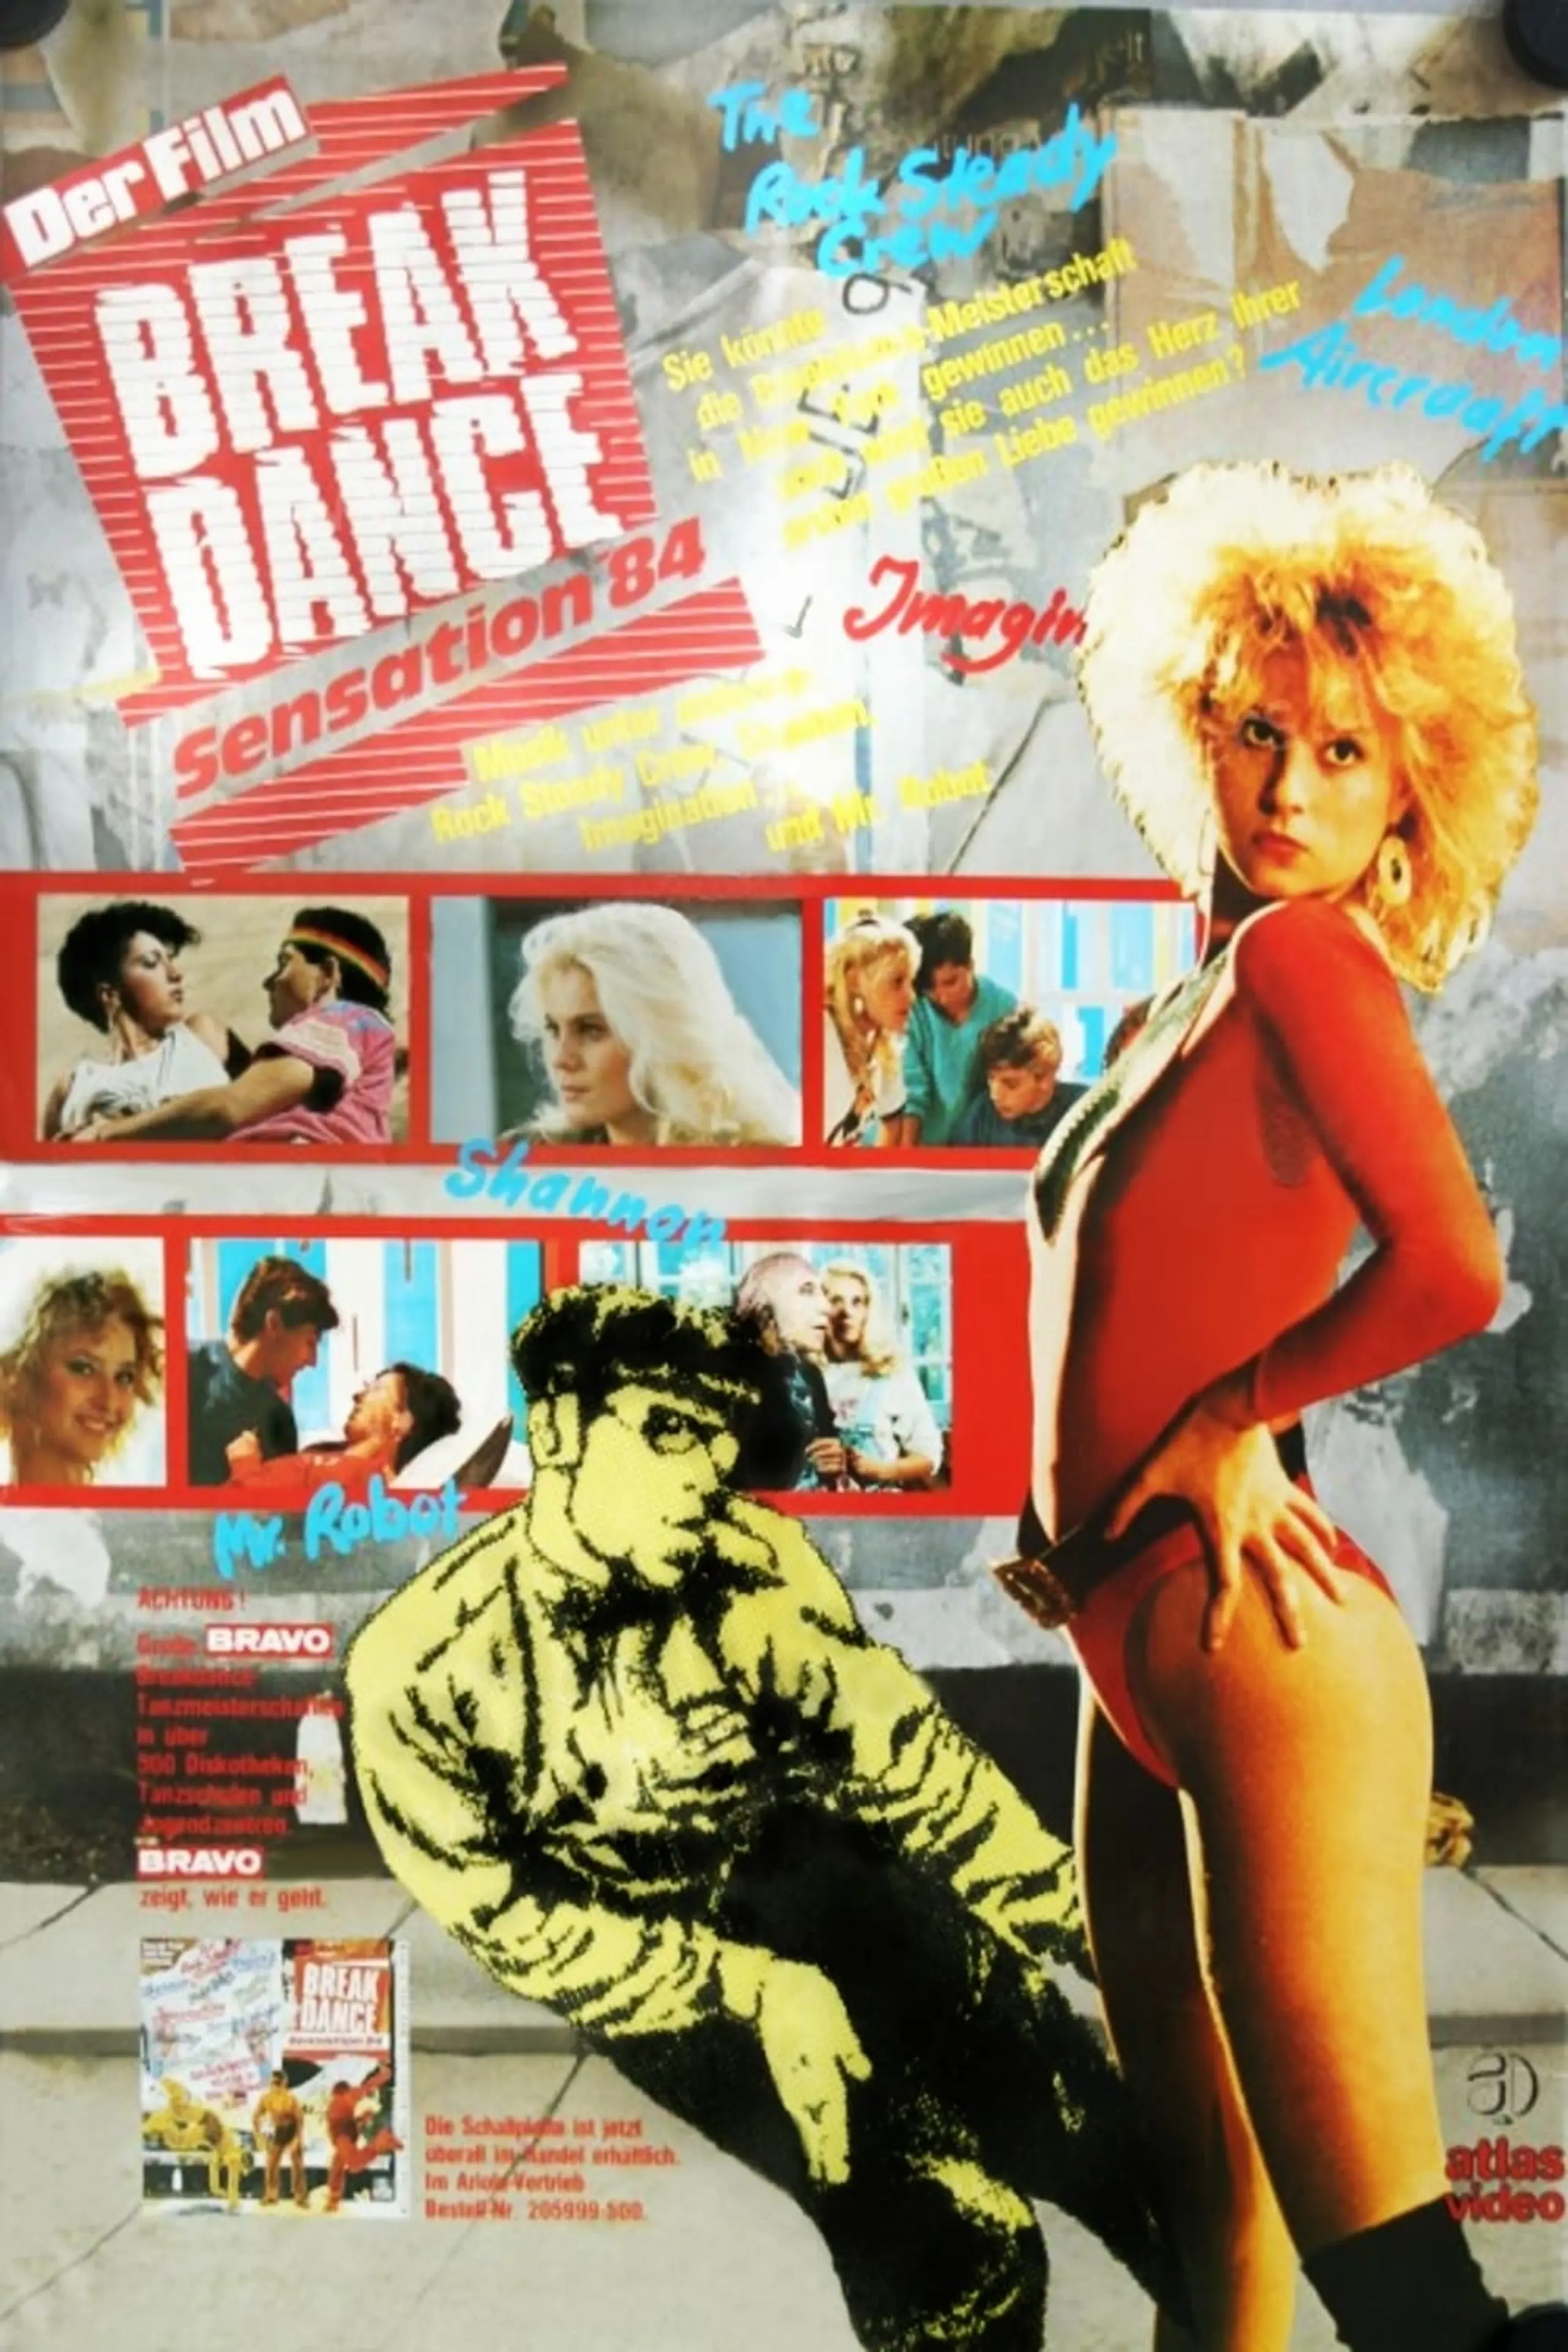 Breakdance Sensation '84